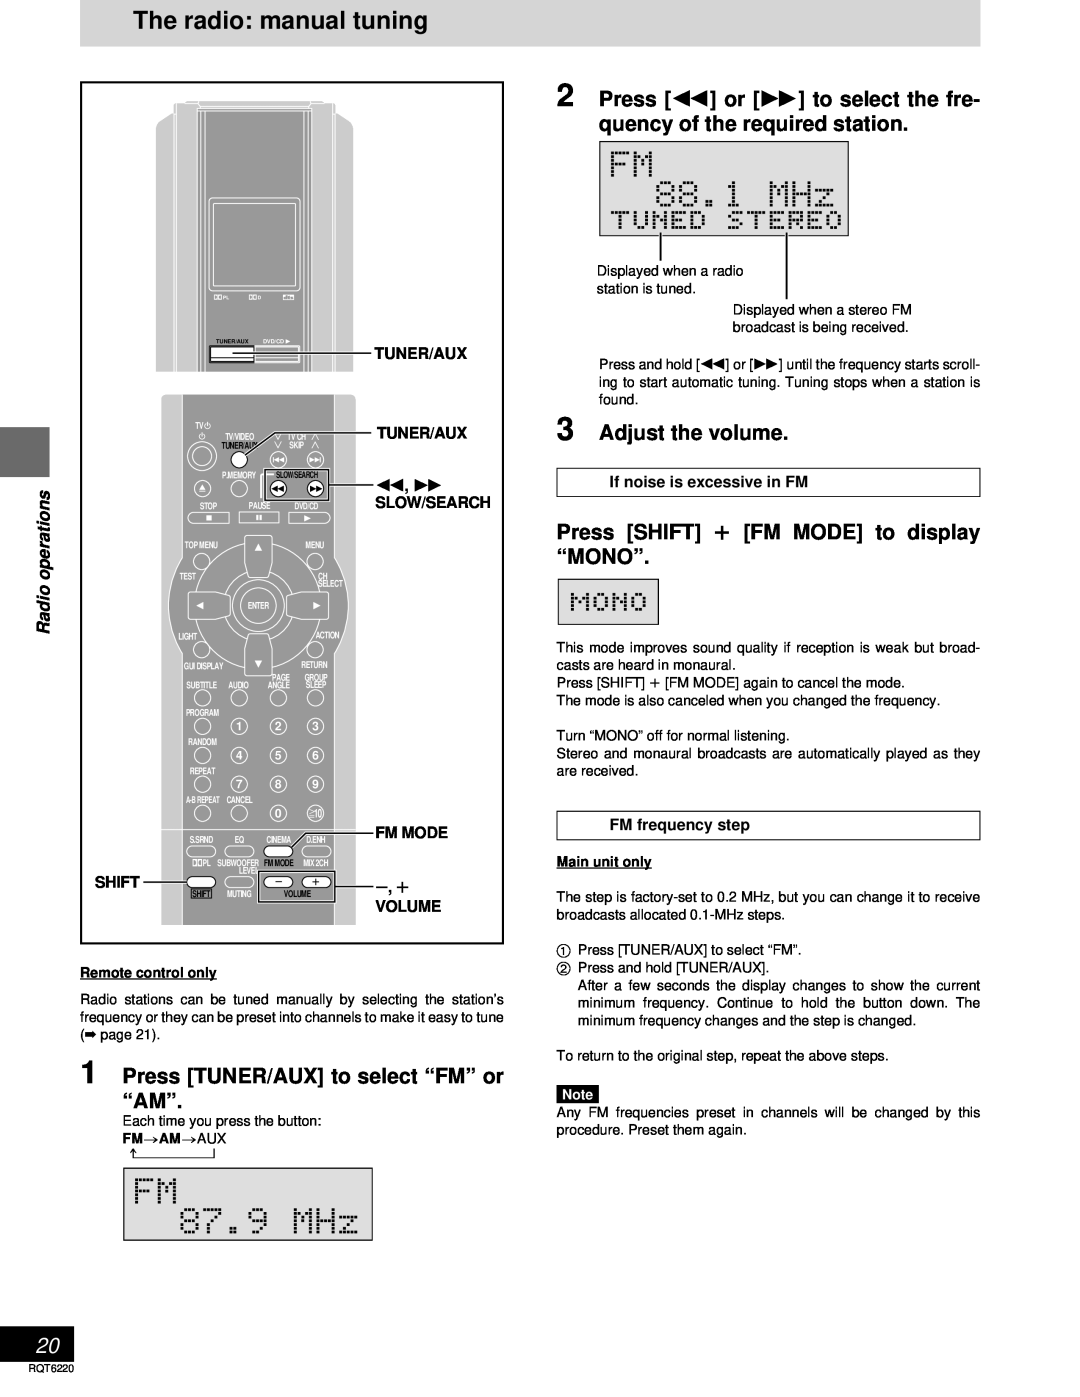 Panasonic SC-DM3 The radio manual tuning, Press TUNER/AUX to select “FM” or “AM”, Adjust the volume, Radio, Tuner/Aux 